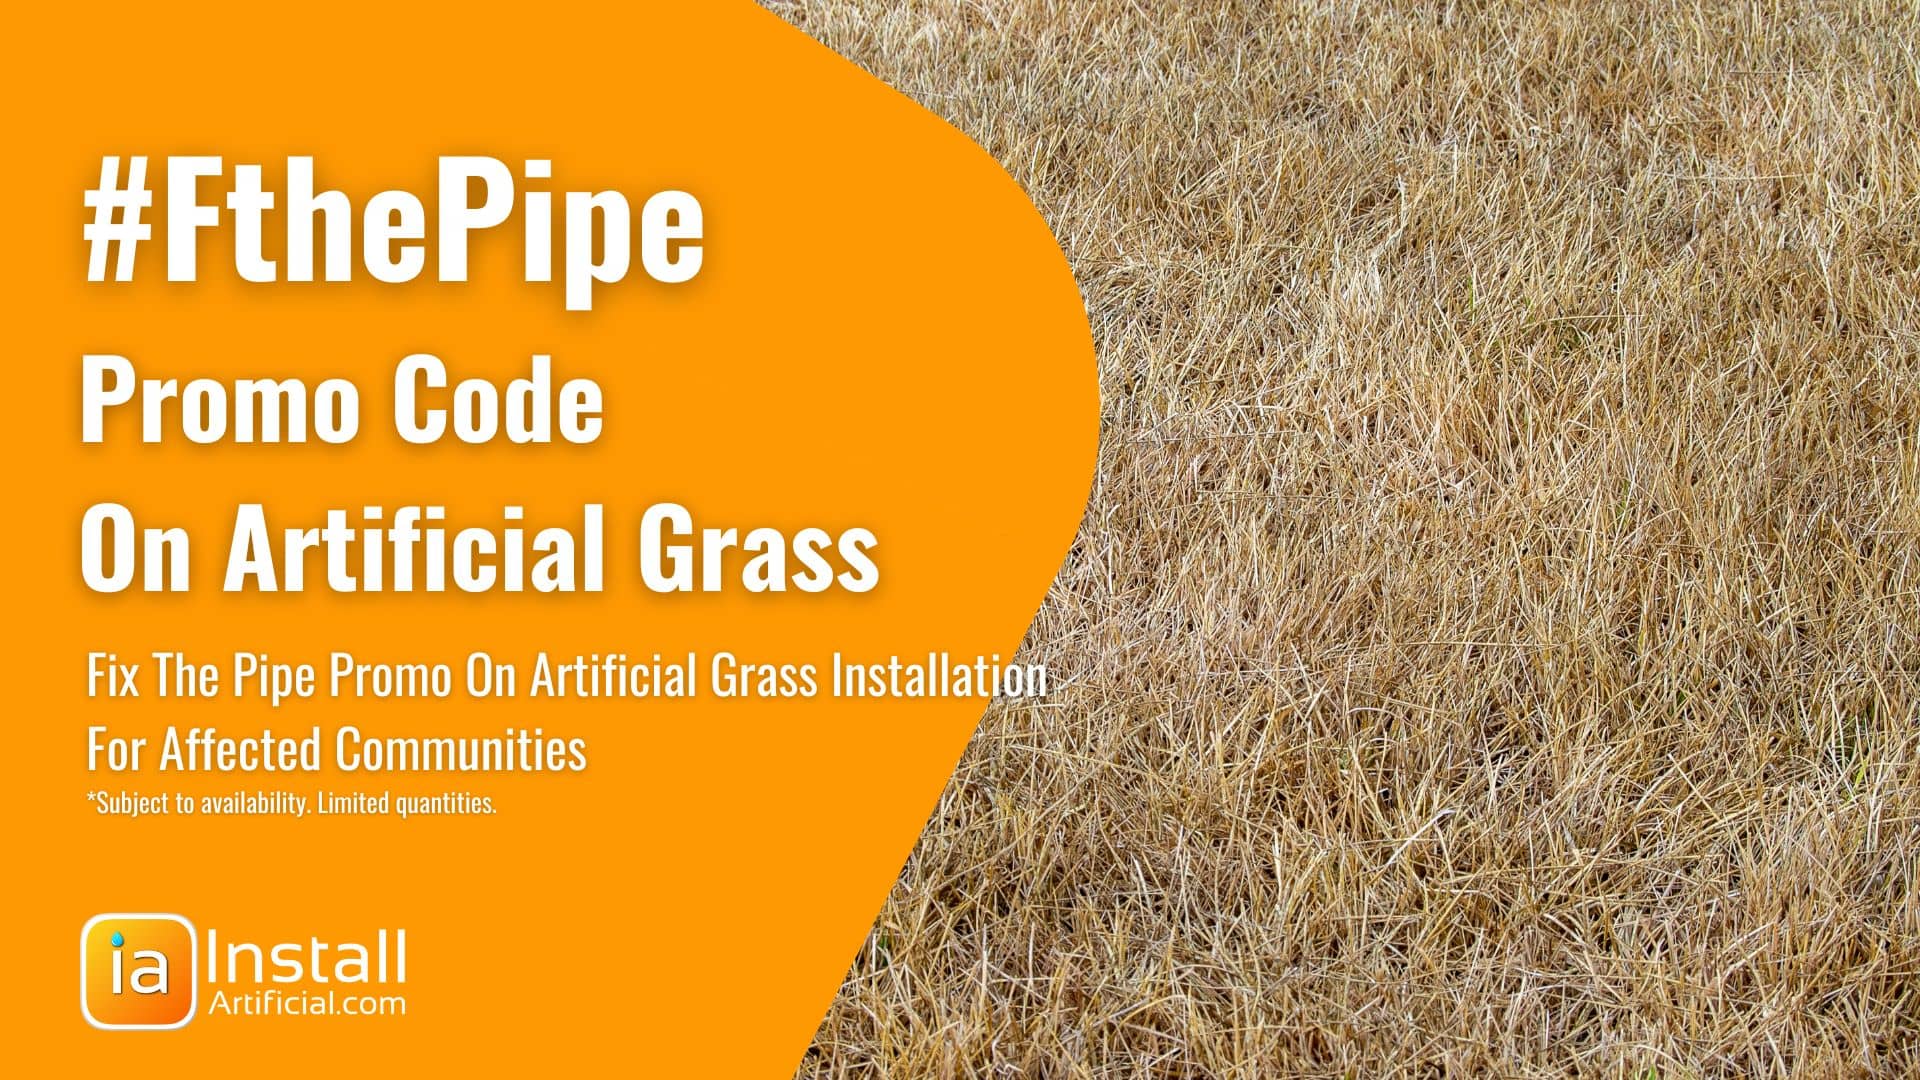 Fixthe pipe promo code (1)